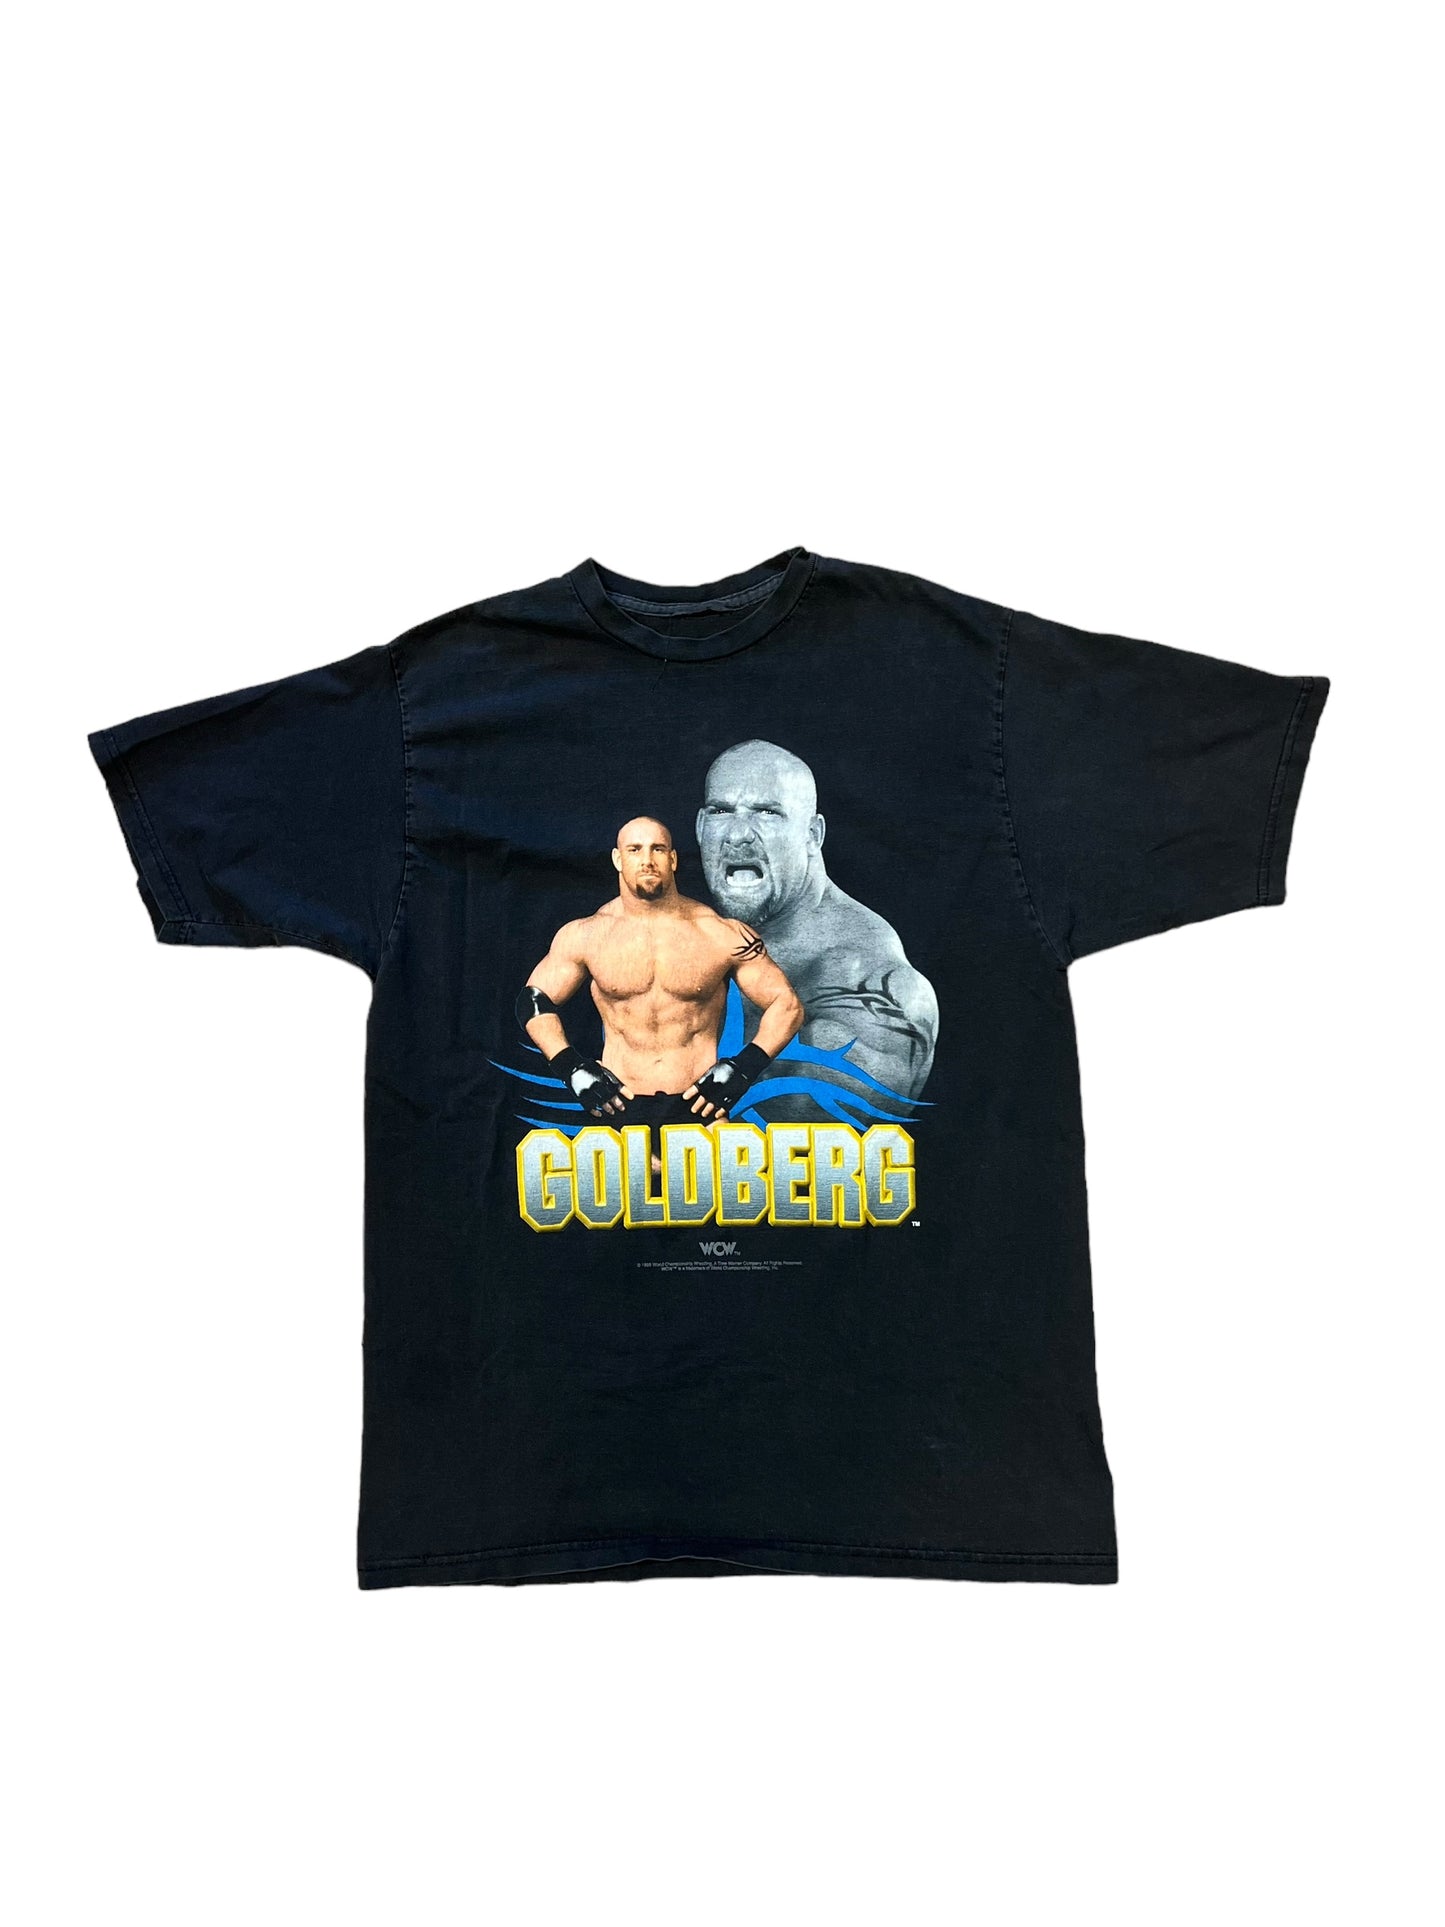 Vintage Goldberg WCW Tee - Large